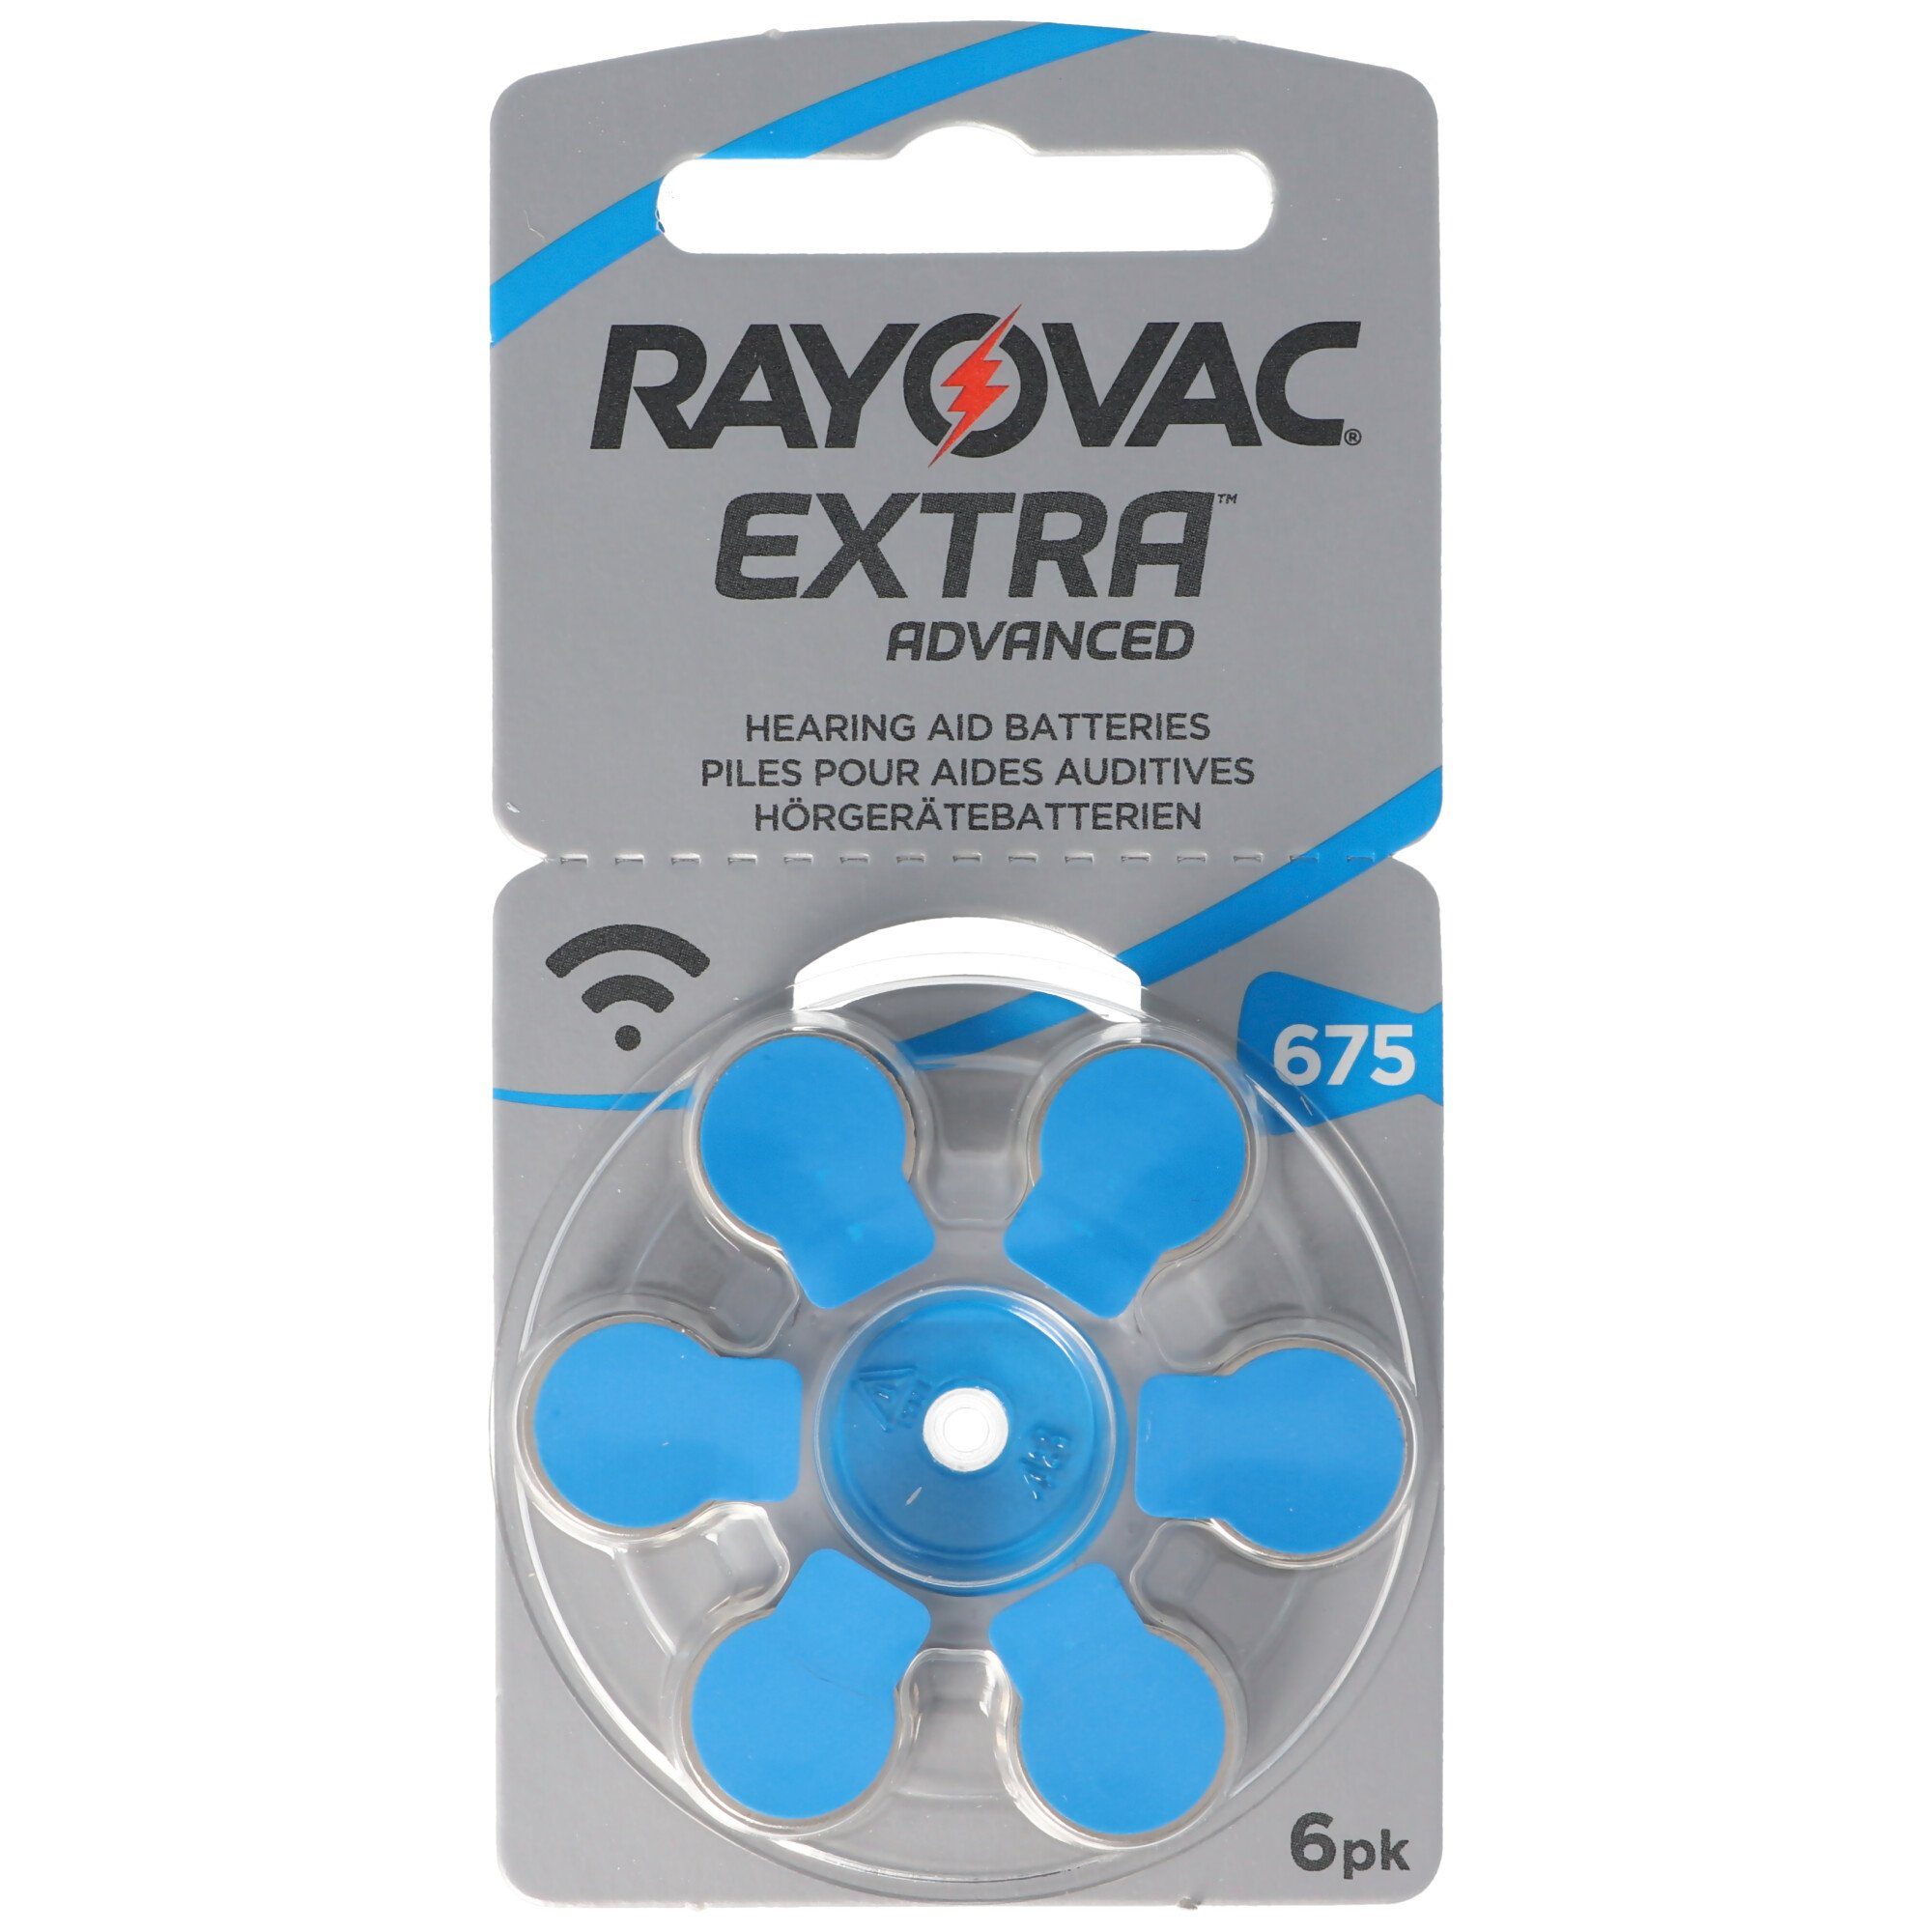 RAYOVAC Rayovac Extra Advanced Hörgerätebatterie HA675, PR44, 4600, Acoustic Batterie, (1,4 V)